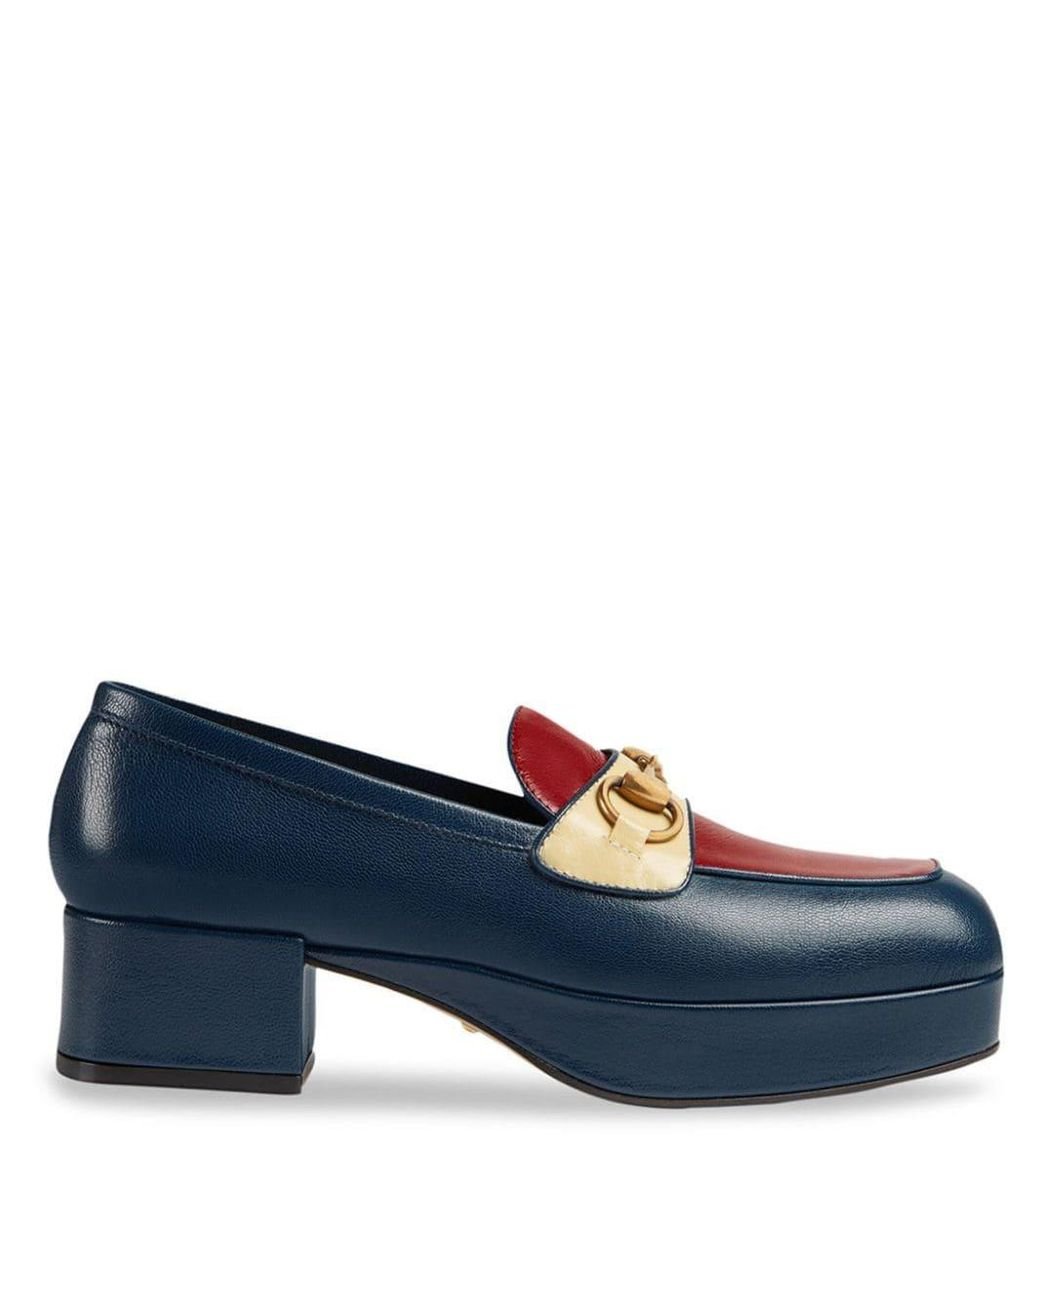 Gucci Horsebit Platform Loafers in Blue | Lyst